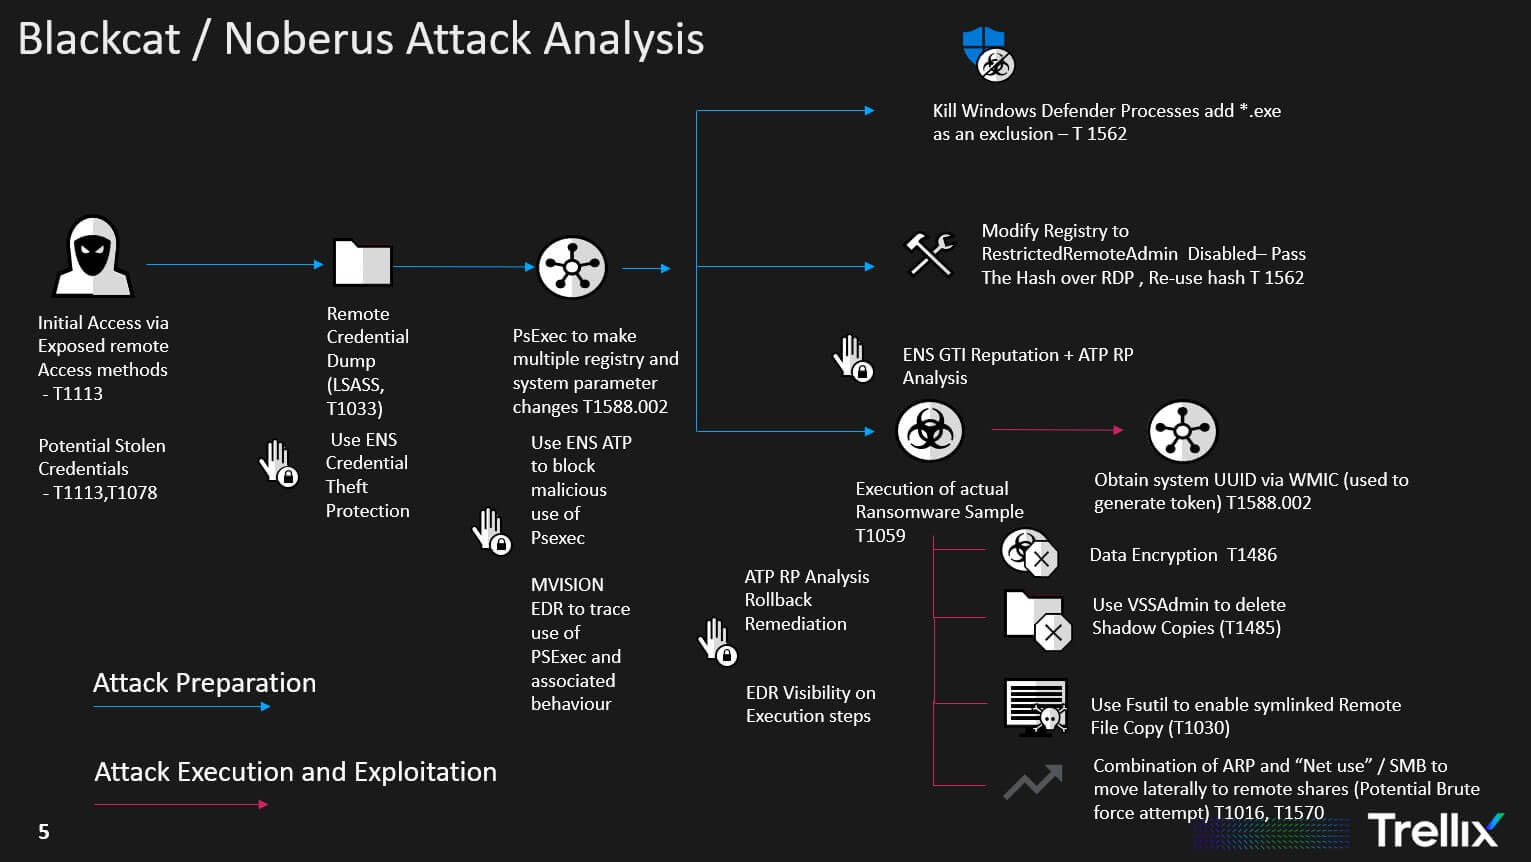 Figure 2: Attack Analysis